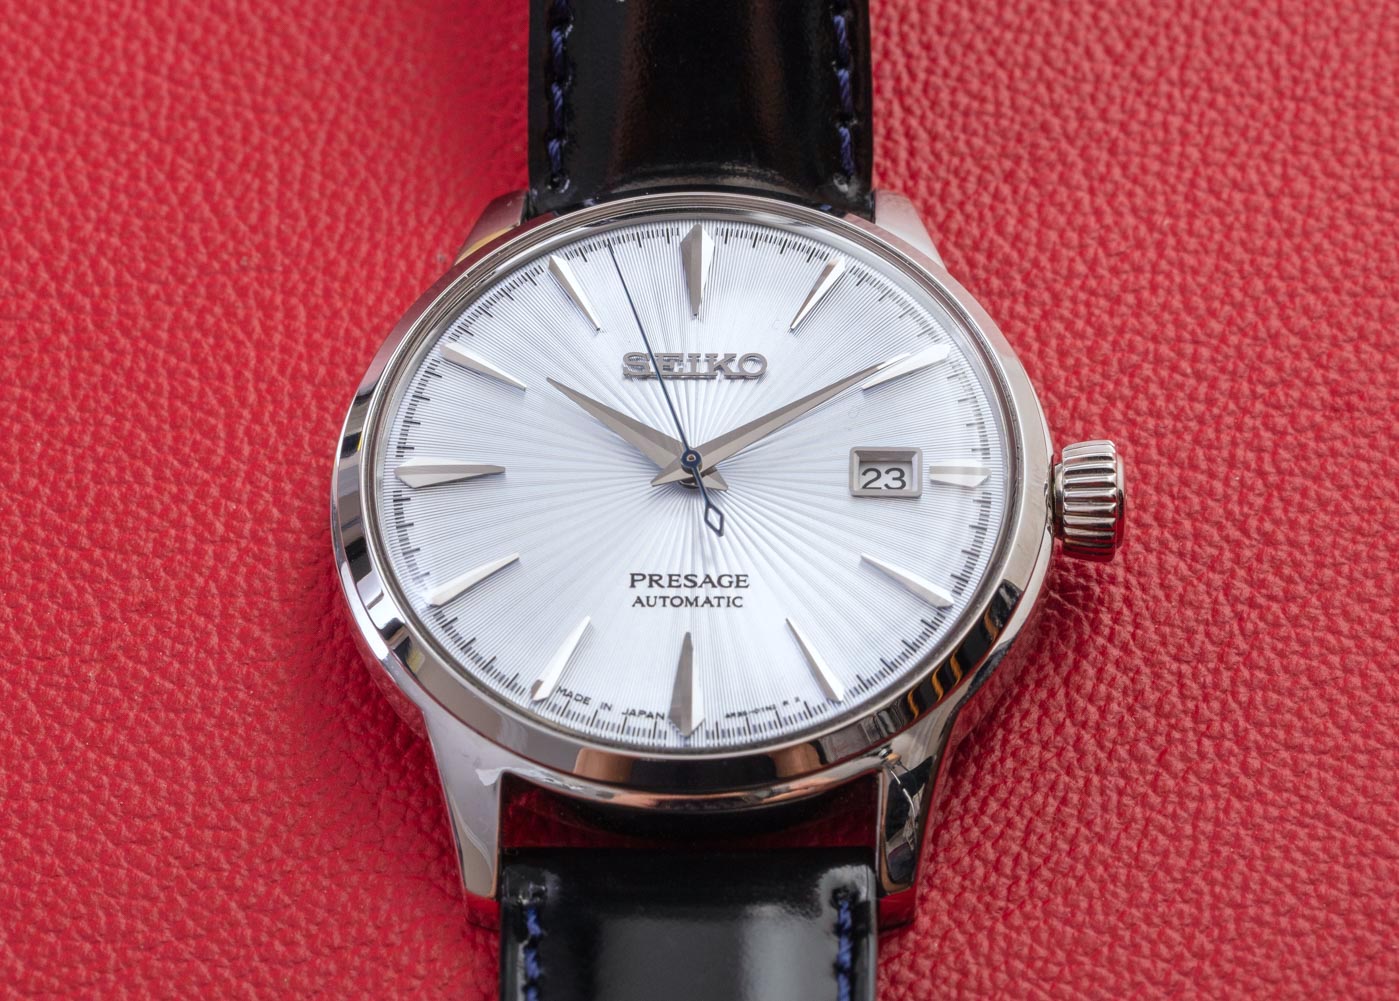 Seiko Presage Automatic SRPB43 Watch Review | aBlogtoWatch